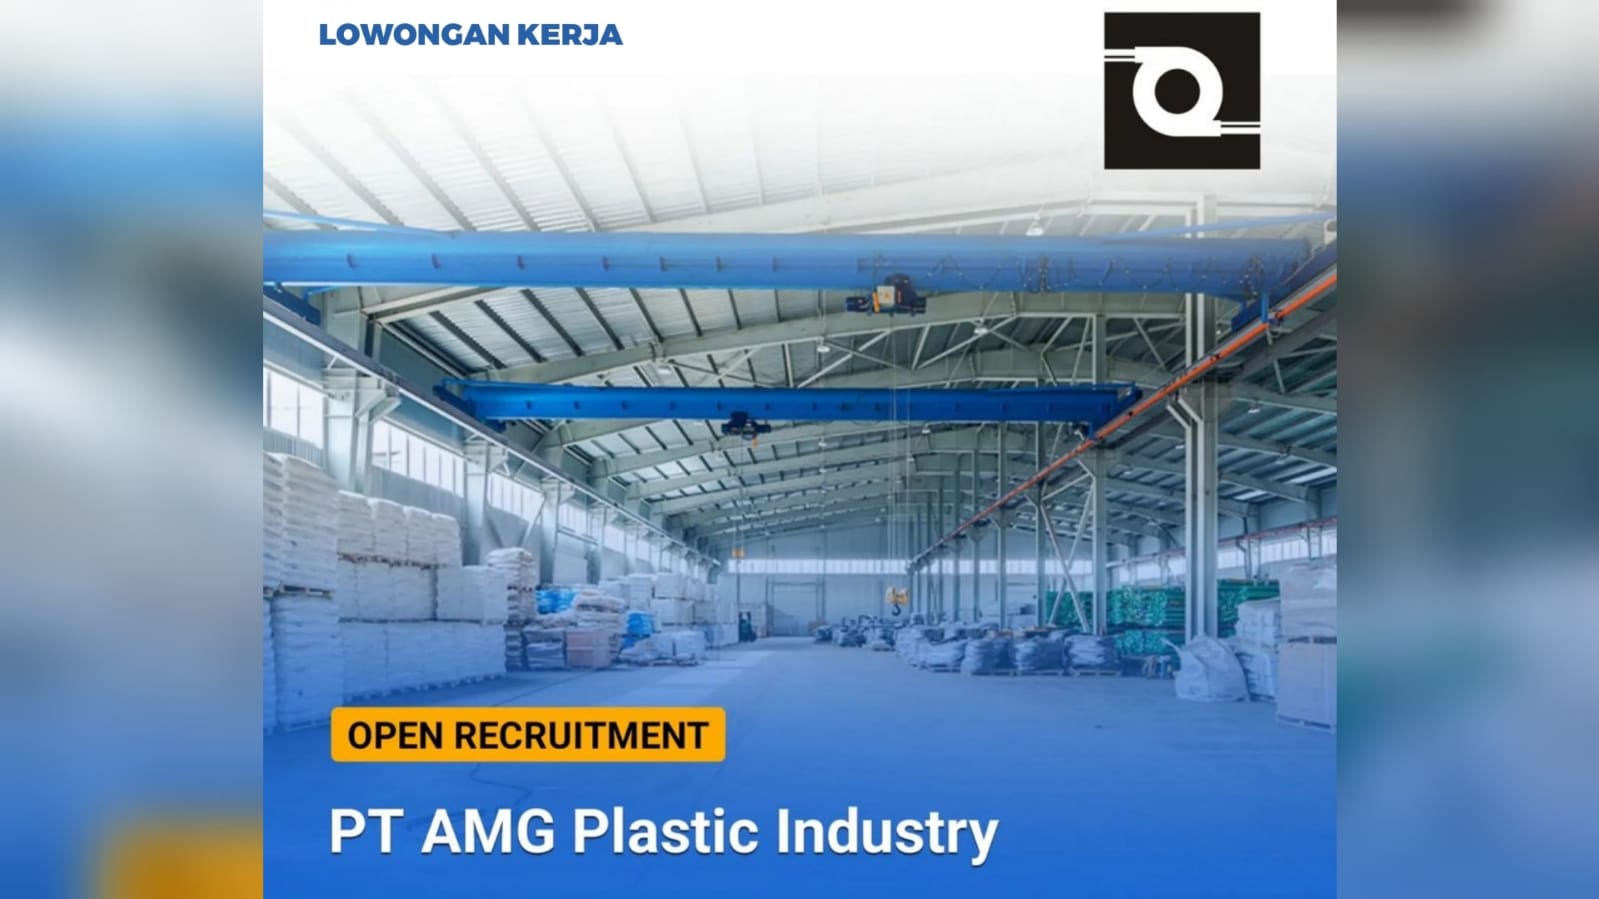 Lowongan Kerja Dibuka untuk Lulusan SMA SMK Manufaktur Produsen Film Plastik PT AMG Plastic Industry